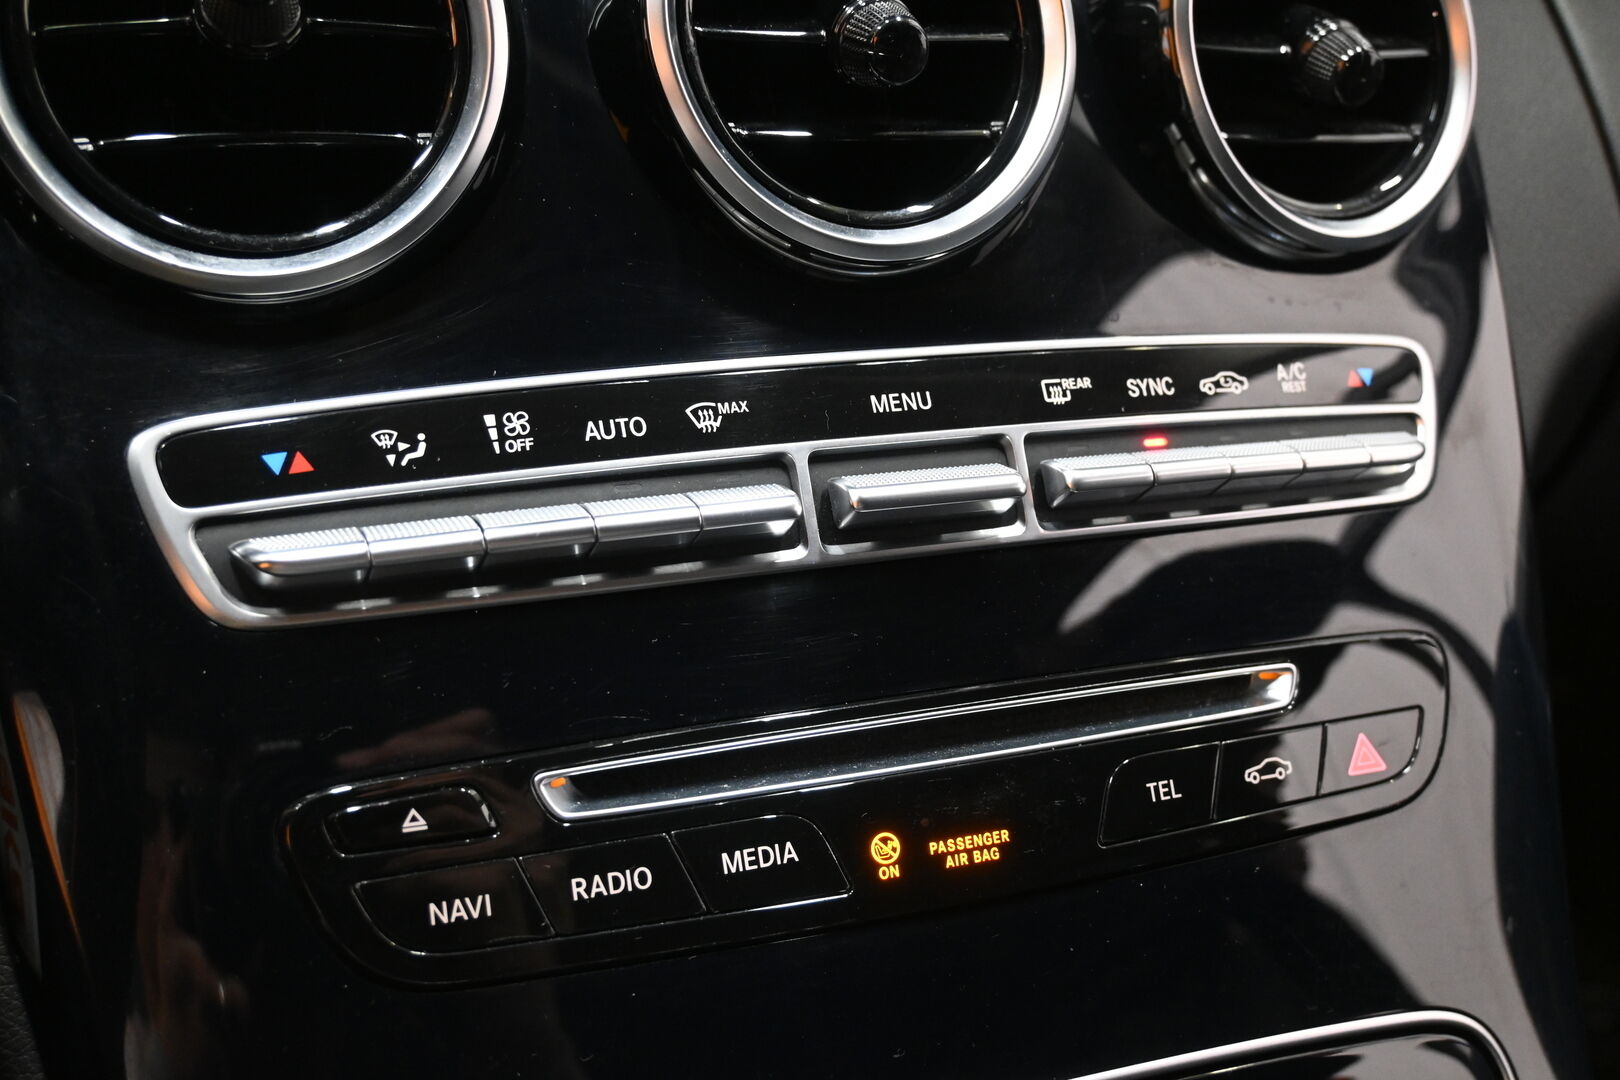 Musta Sedan, Mercedes-Benz C – MMO-400